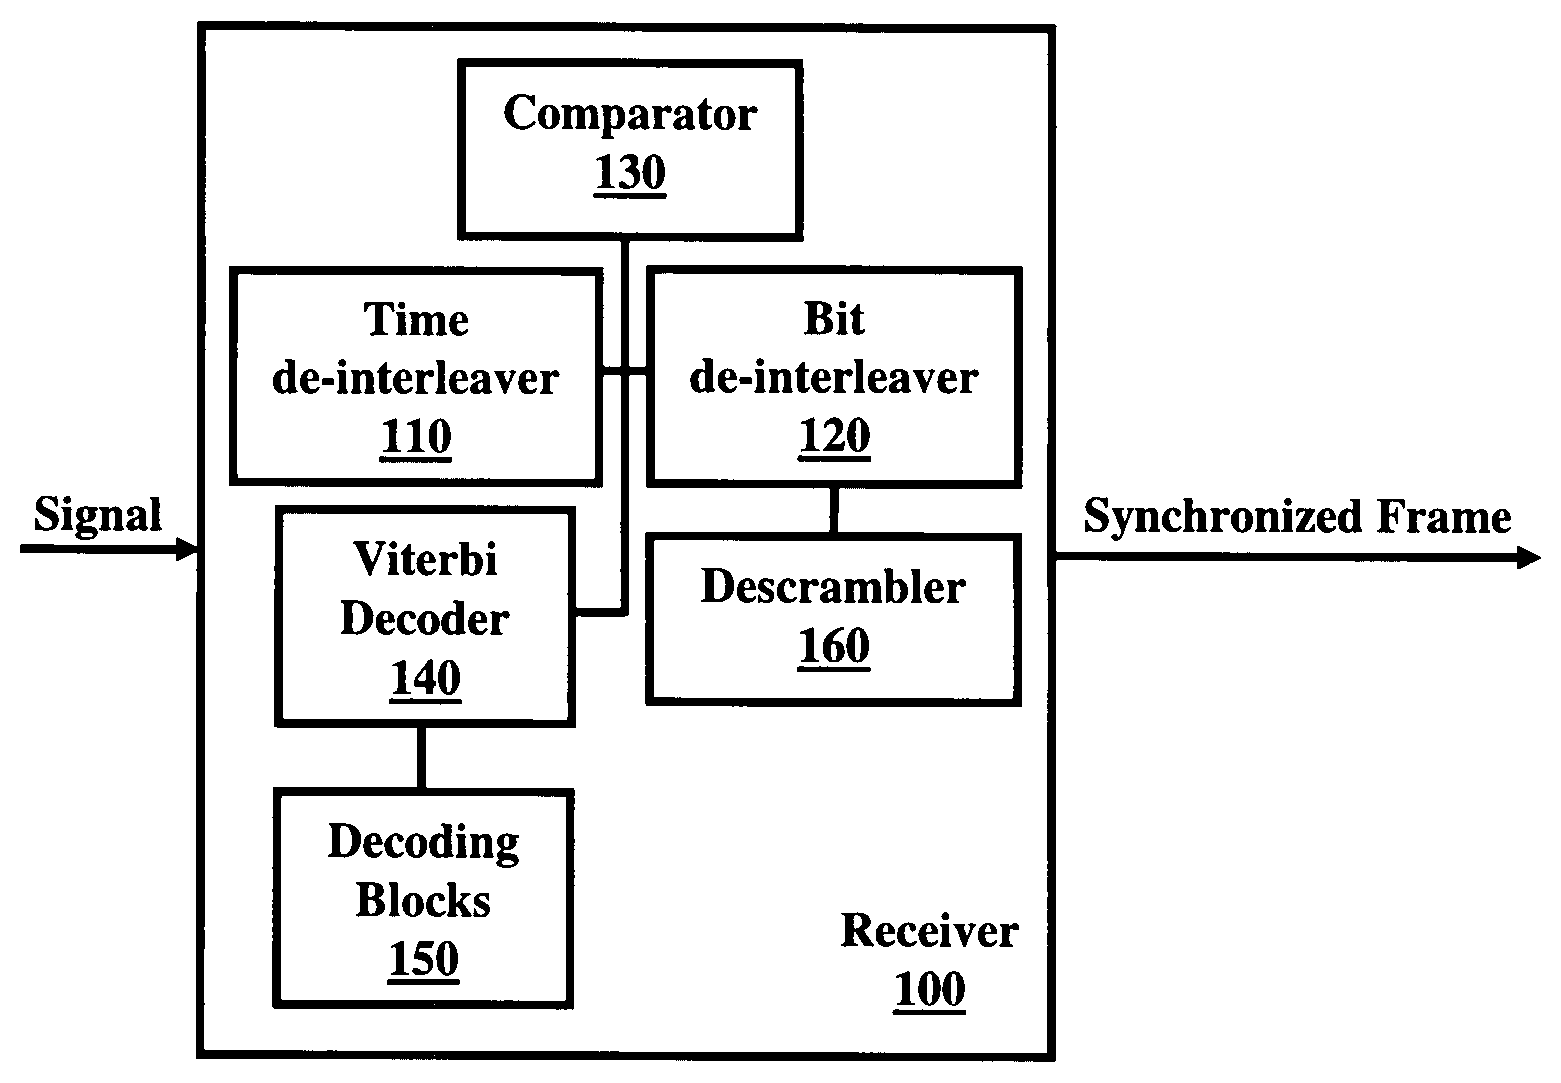 Segmented-frame synchronization for isdb-t and isdb-tsb receiver